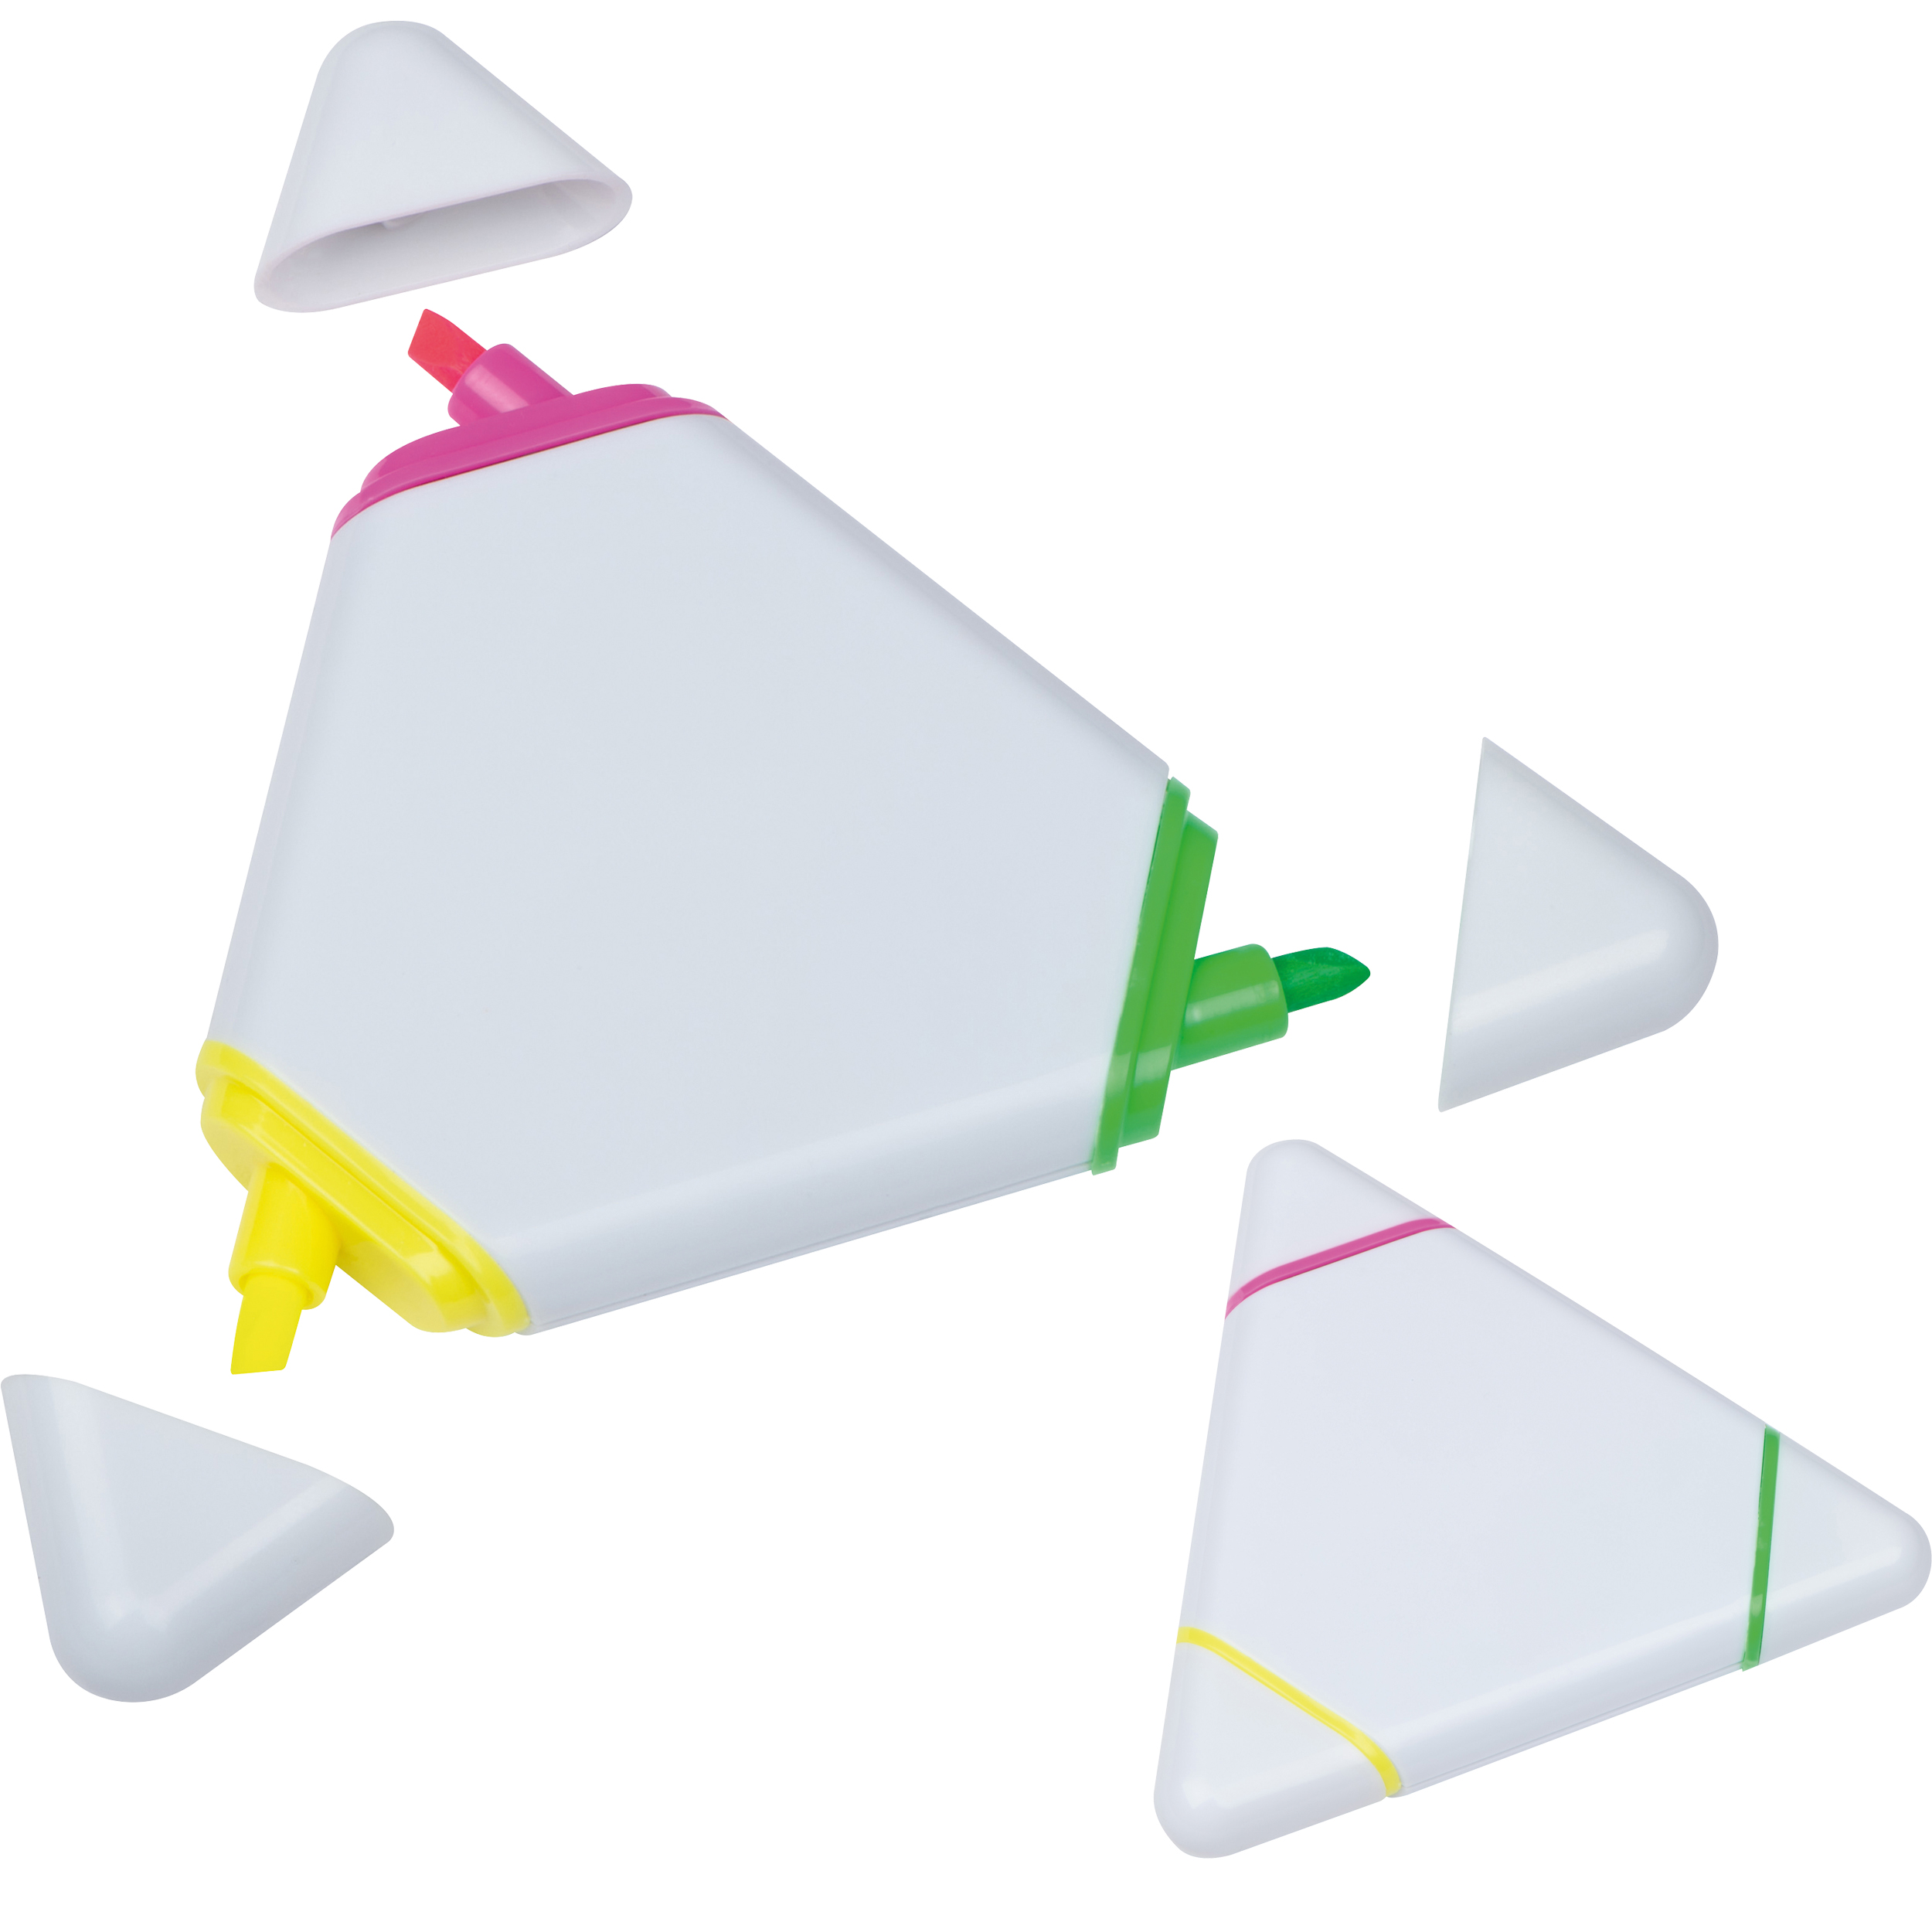 Triángulo marcador